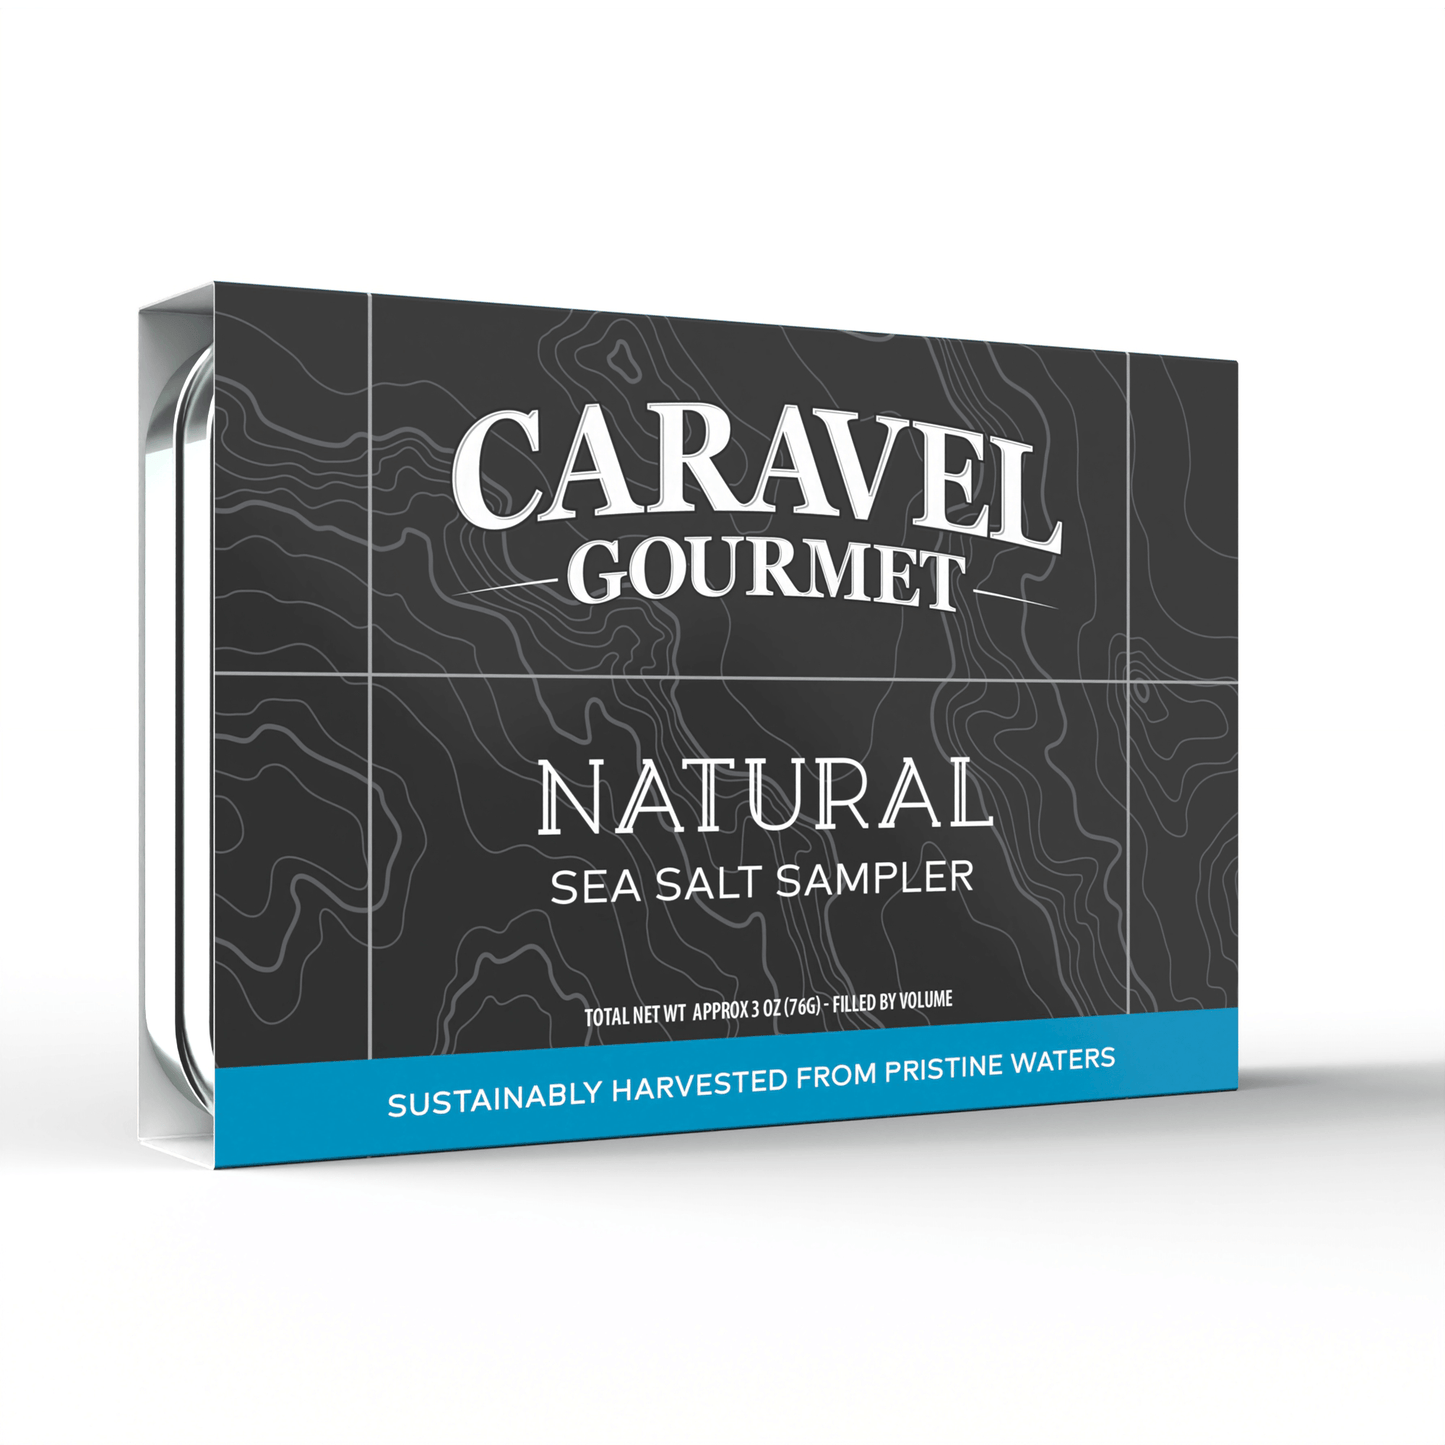 Natural Salt Sampler, Caravel Gourmet (Case of 12)